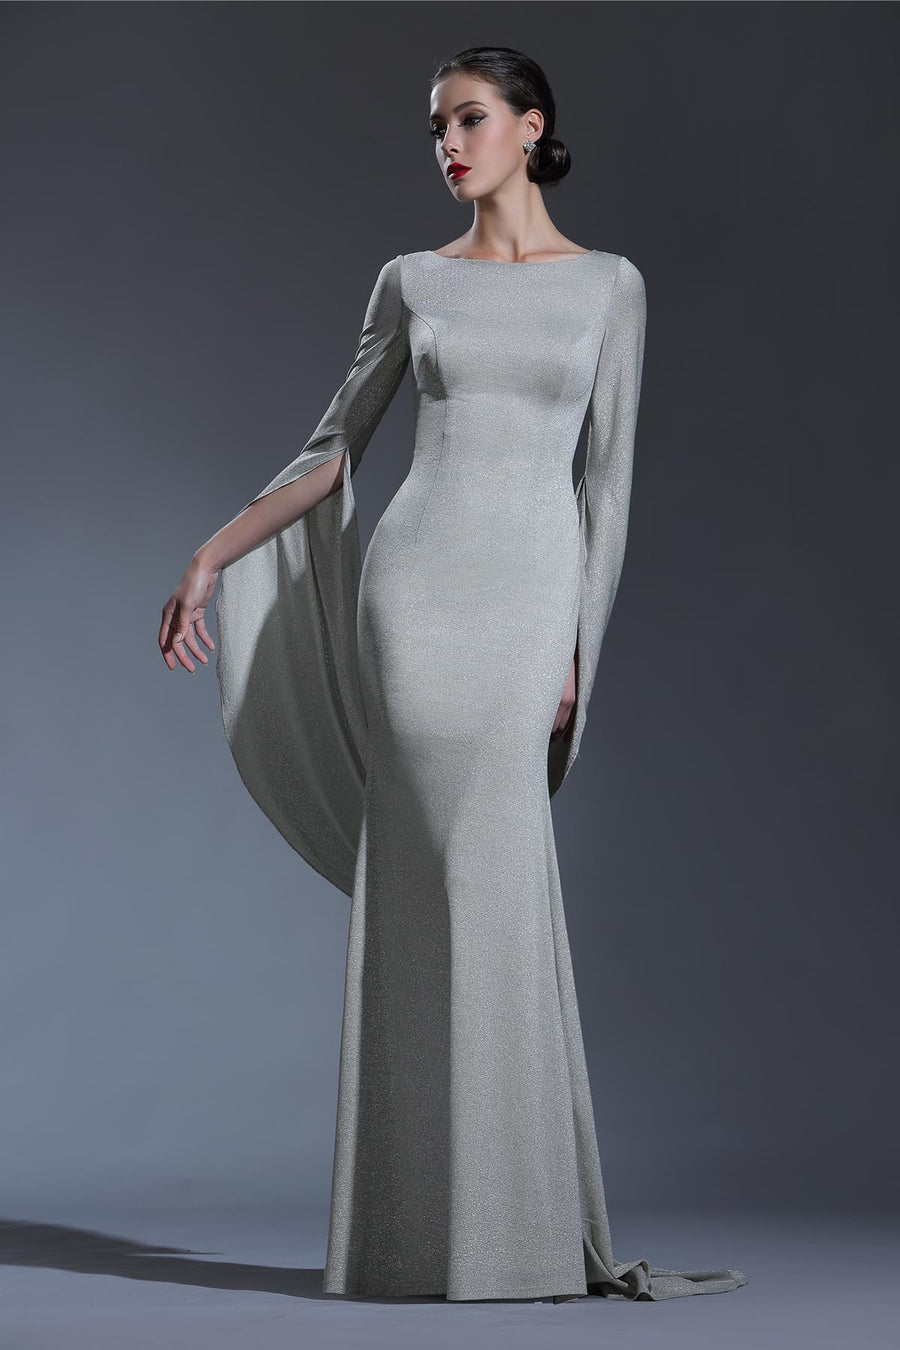 Empire Waist Round 3/4 Sleeves Full Length Polyester Promo Dresses